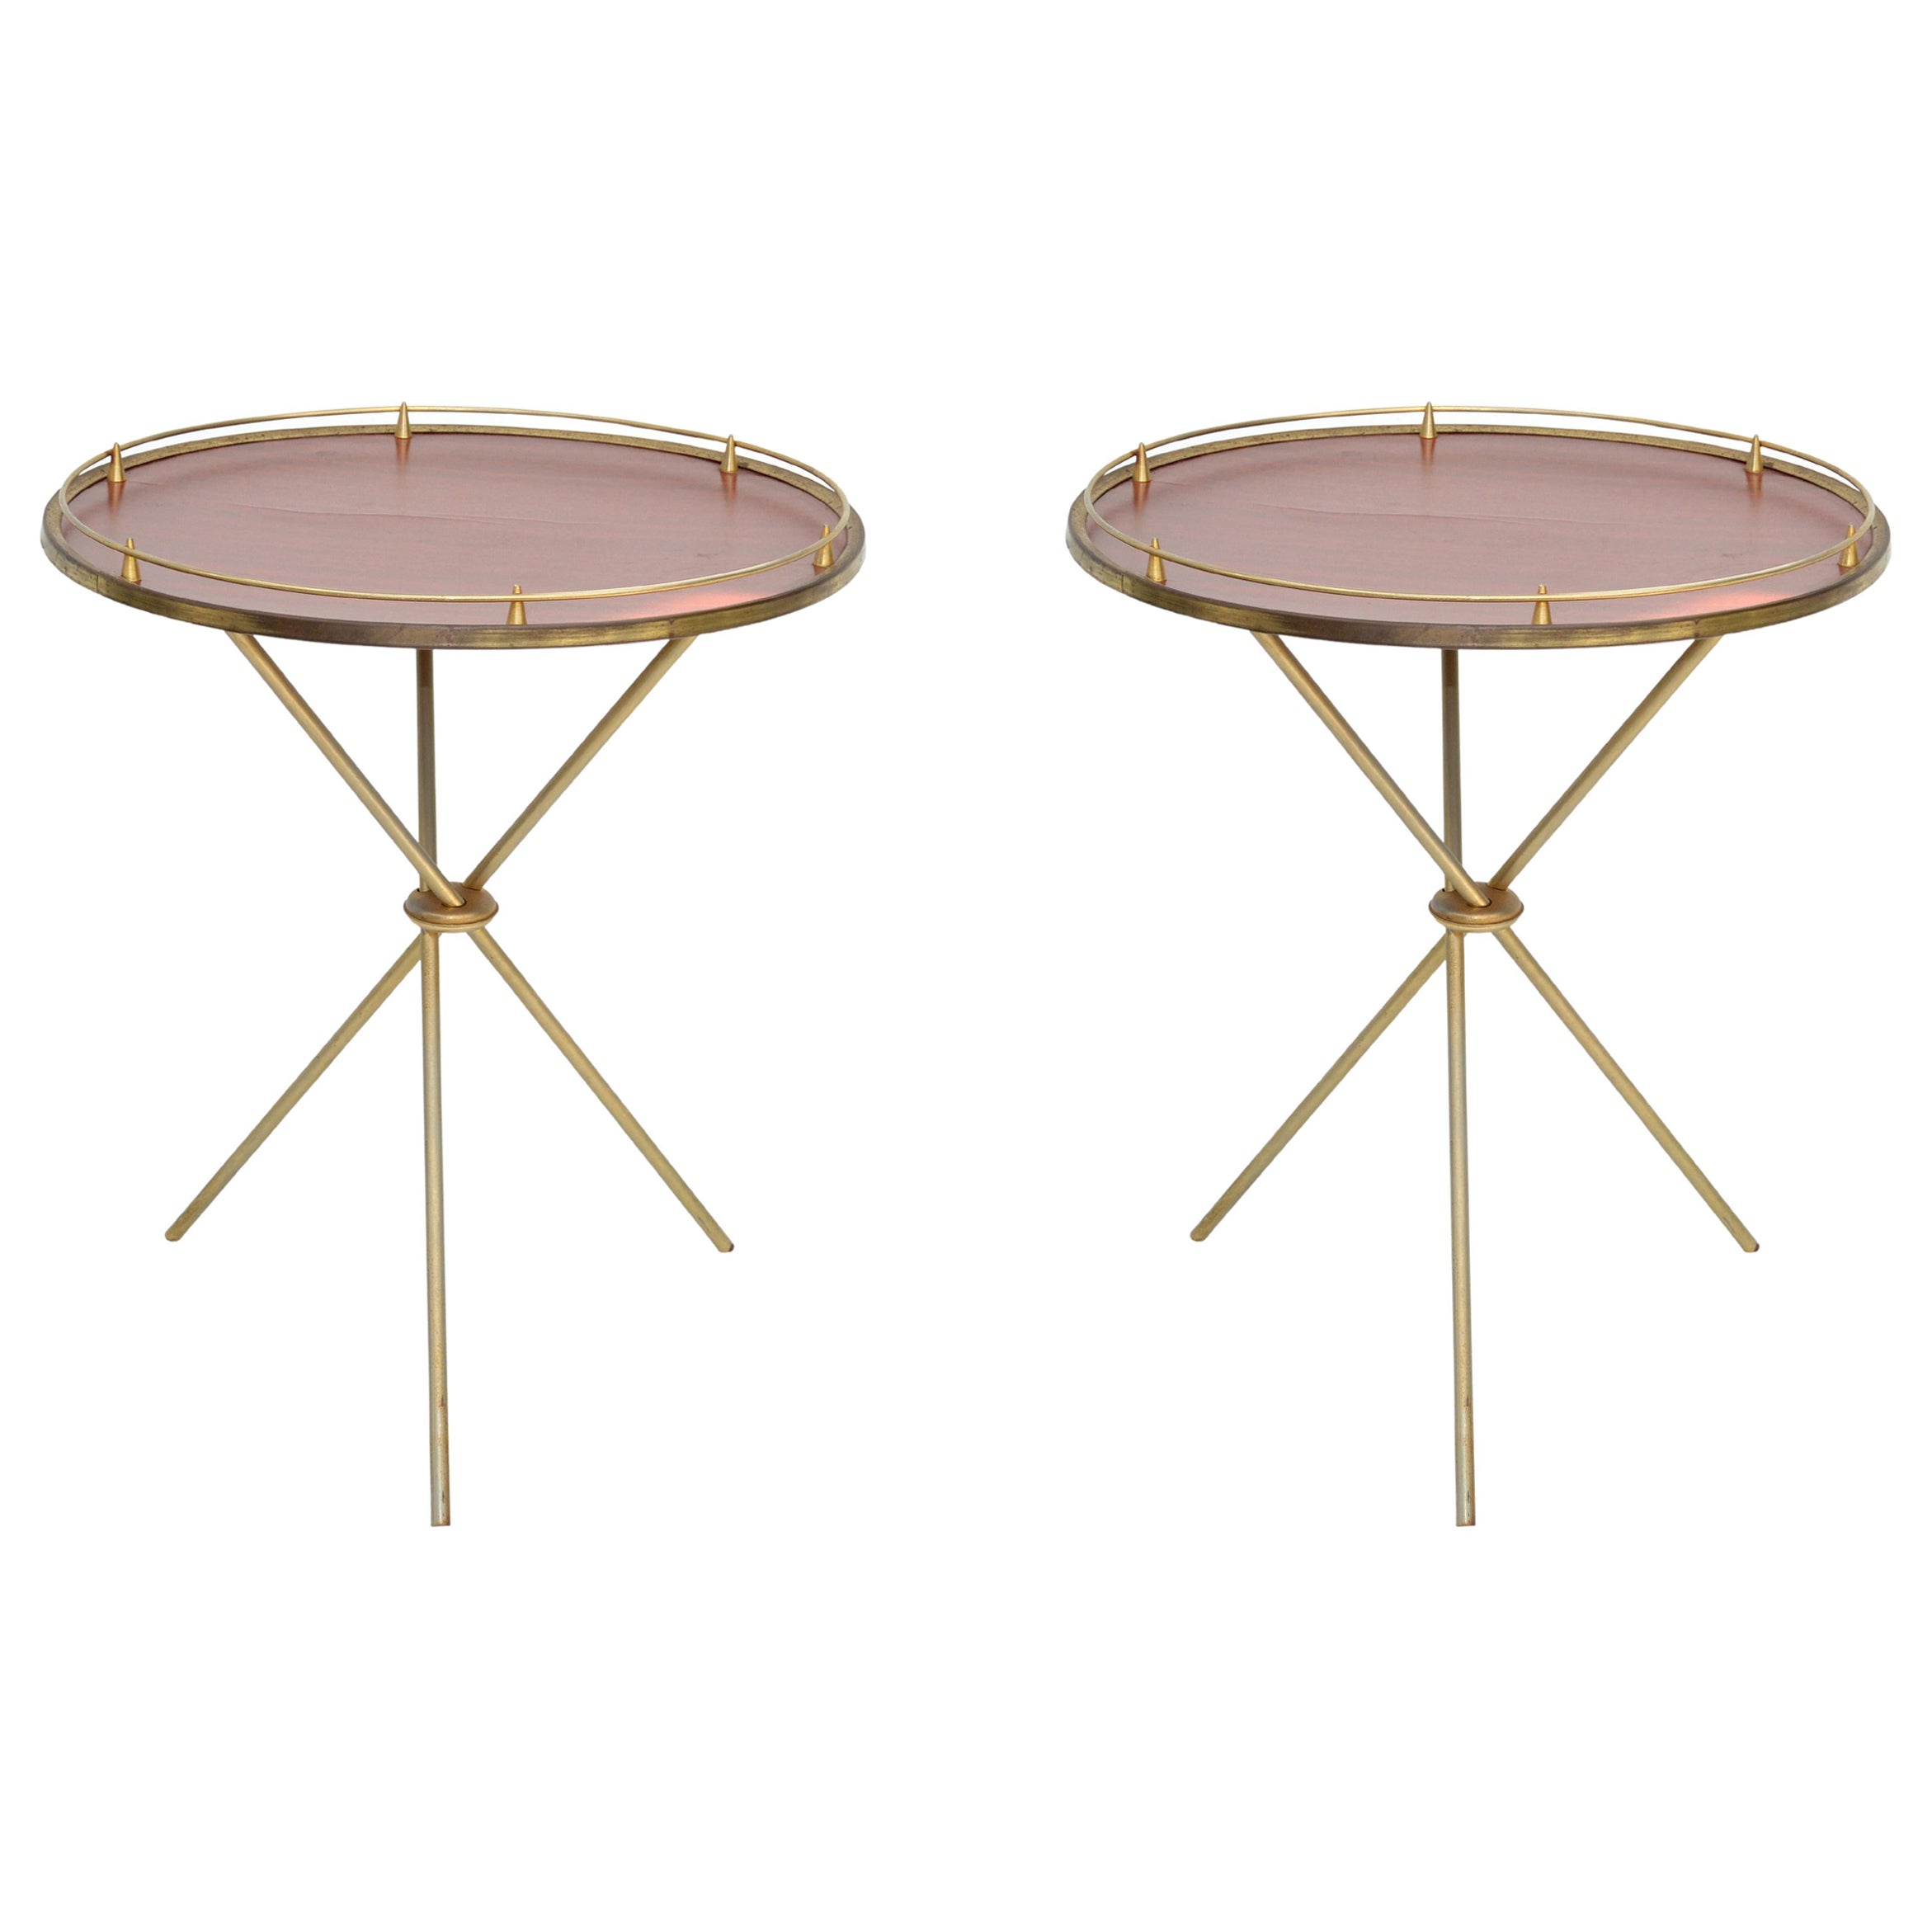 Pair of Maison Jansen Style Round Side Table Tripod France Mid-Century Modern 